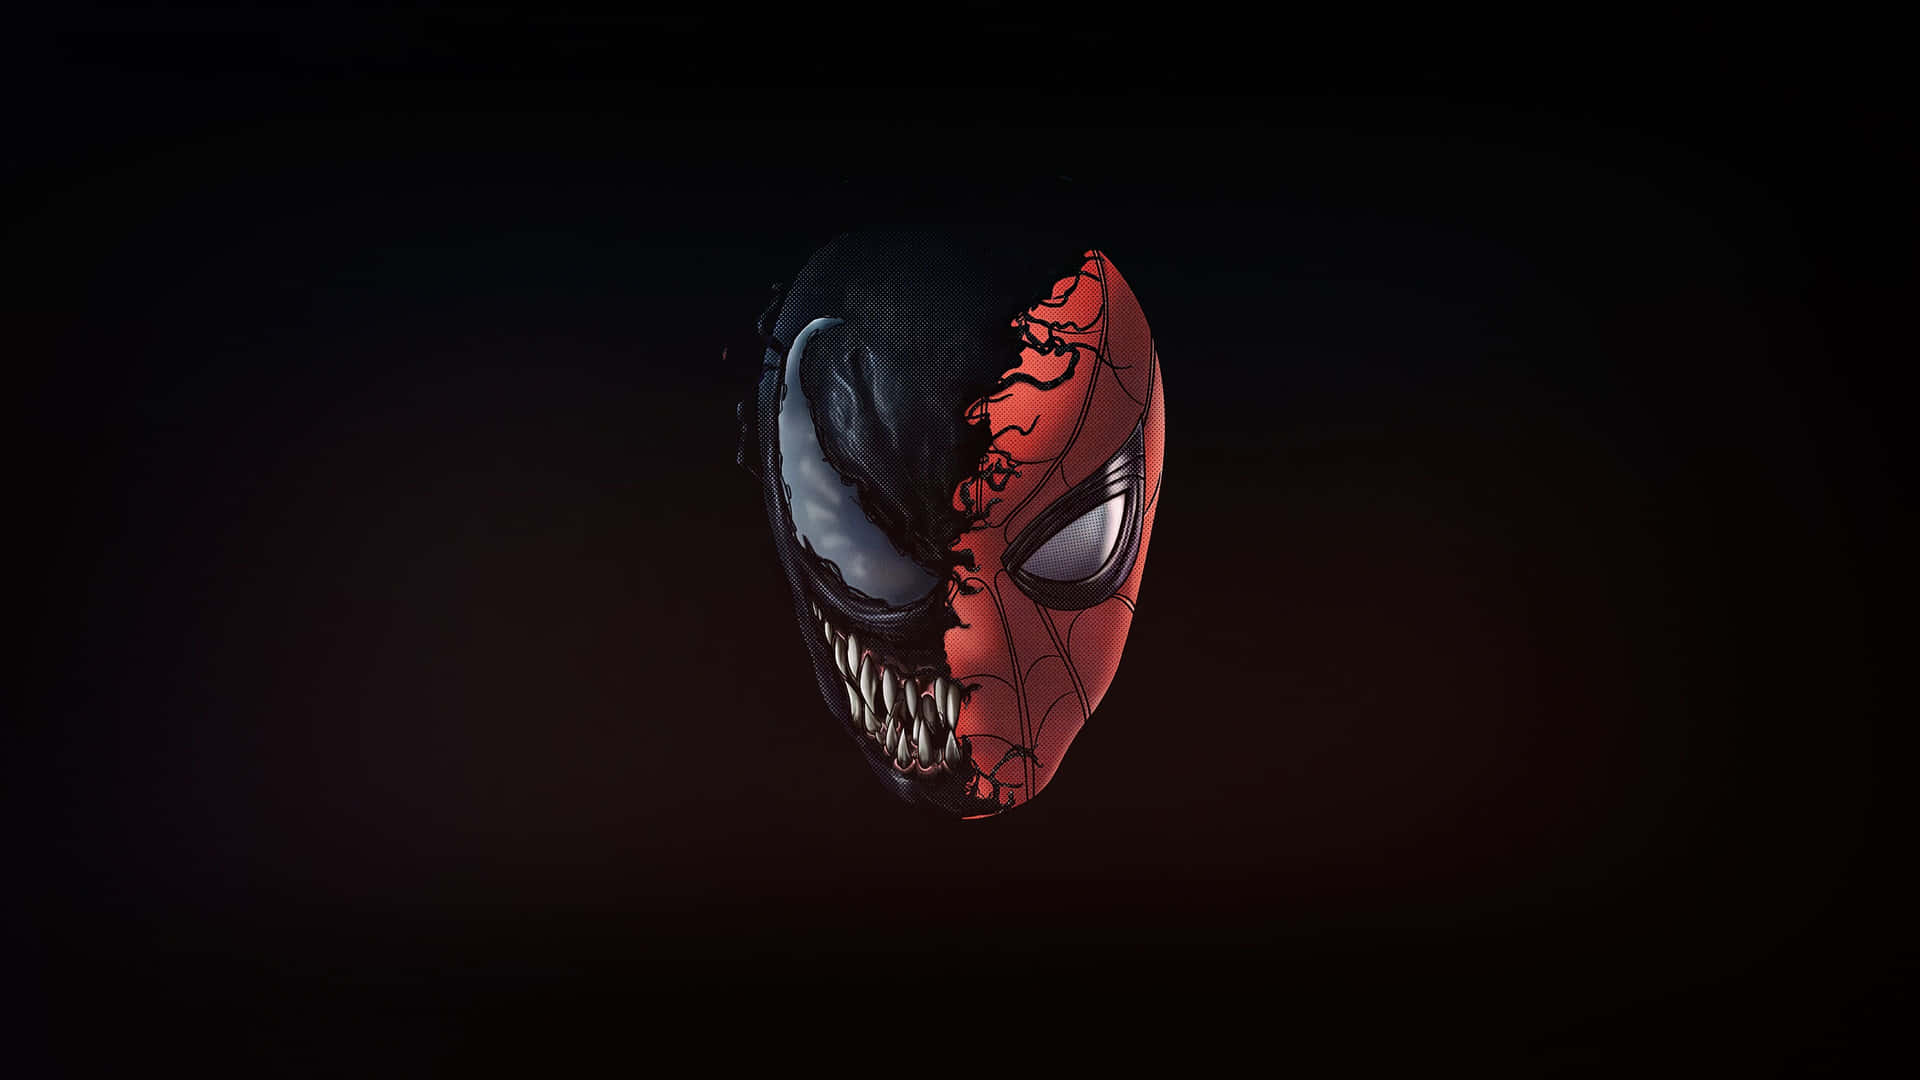 Tom Hardy as Venom, the dark anti-hero of the Spider Man universe. Wallpaper